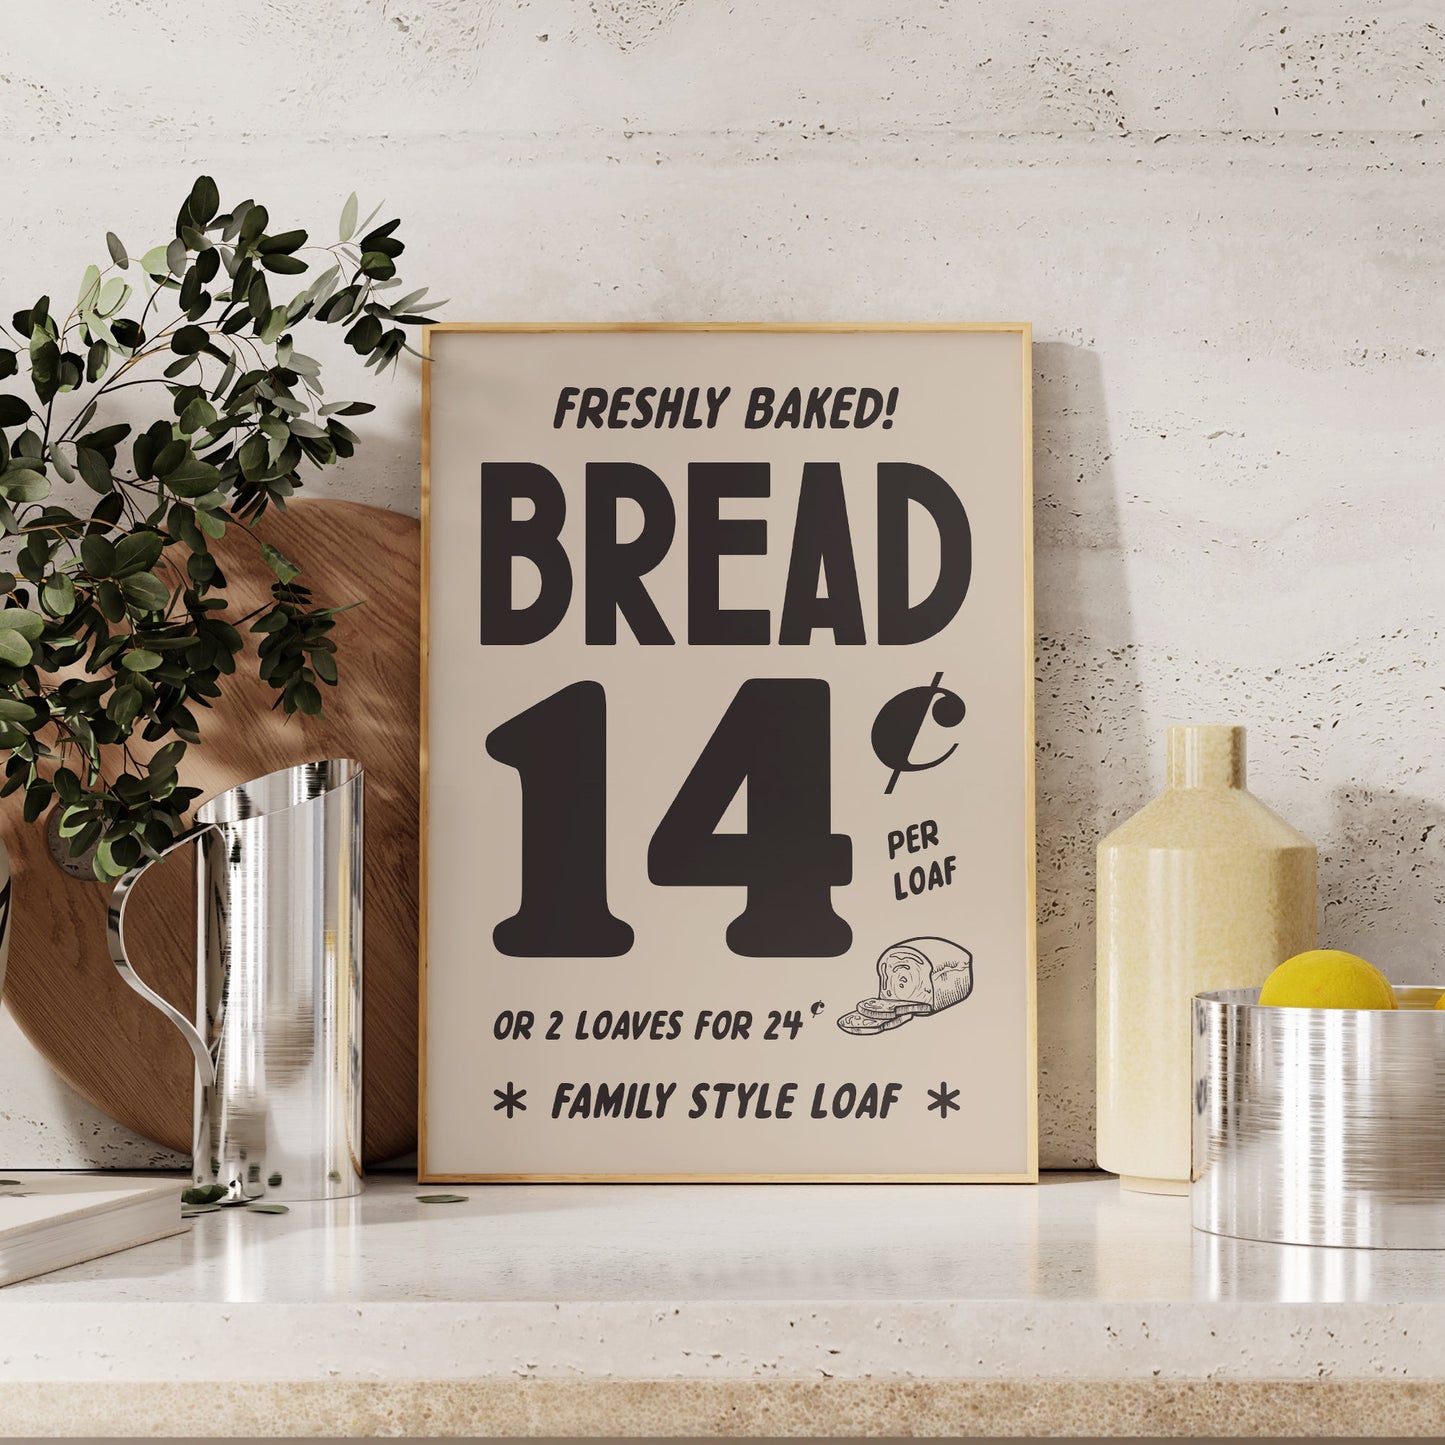 Vintage Bread Advert Print